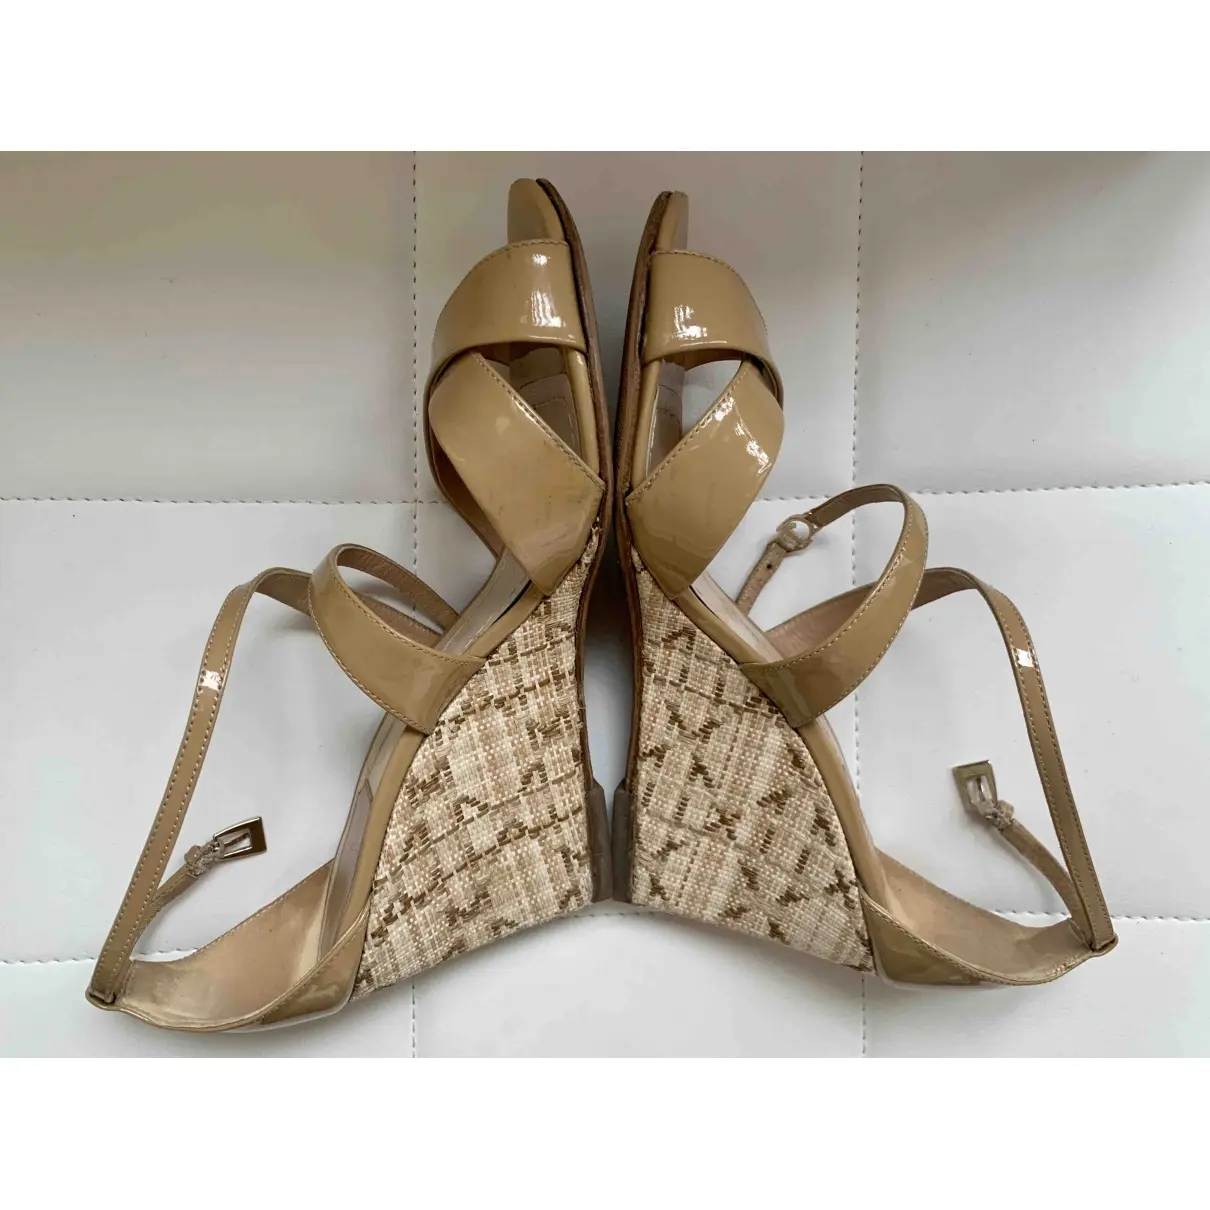 Patent leather sandal Dior